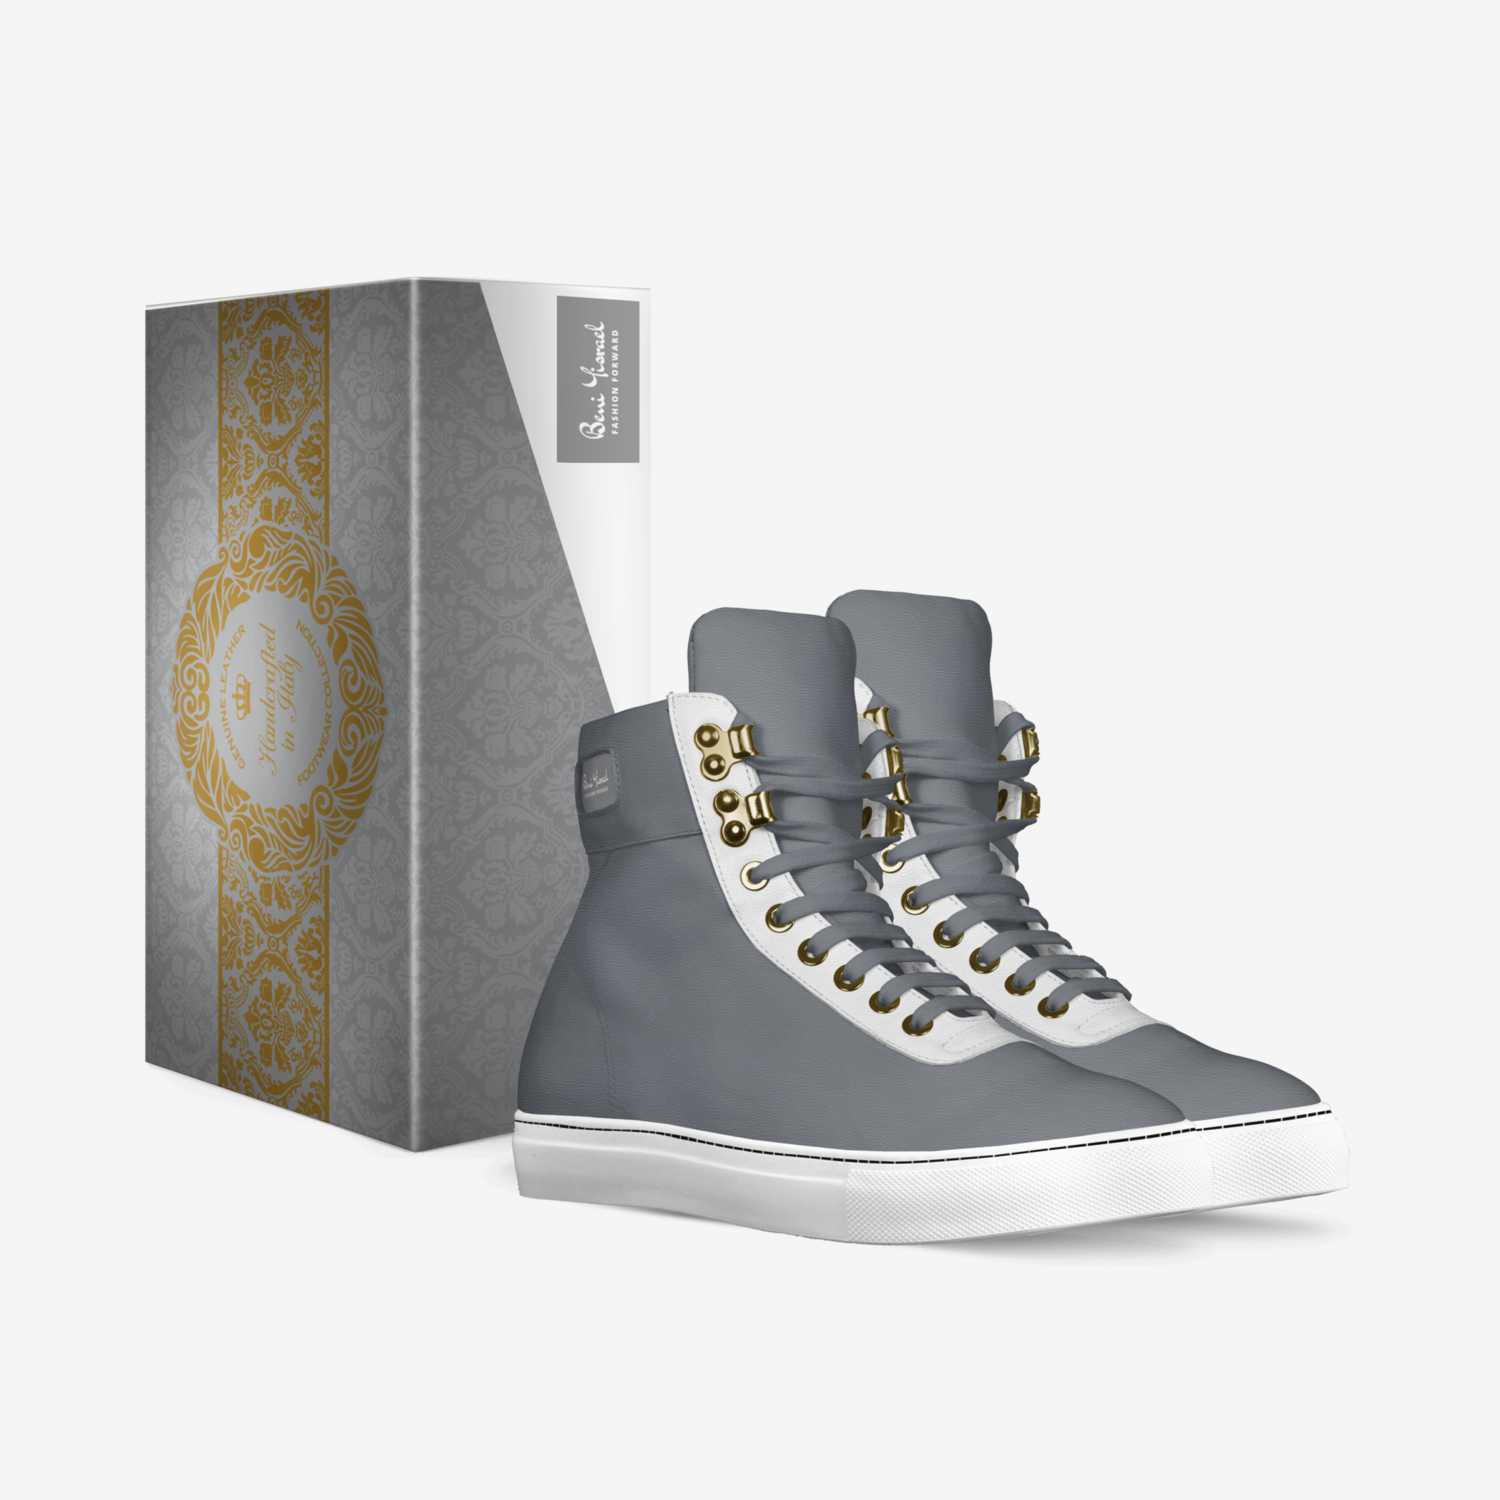 Beni Yisrael custom made in Italy shoes by Kenekia Simpkins | Box view